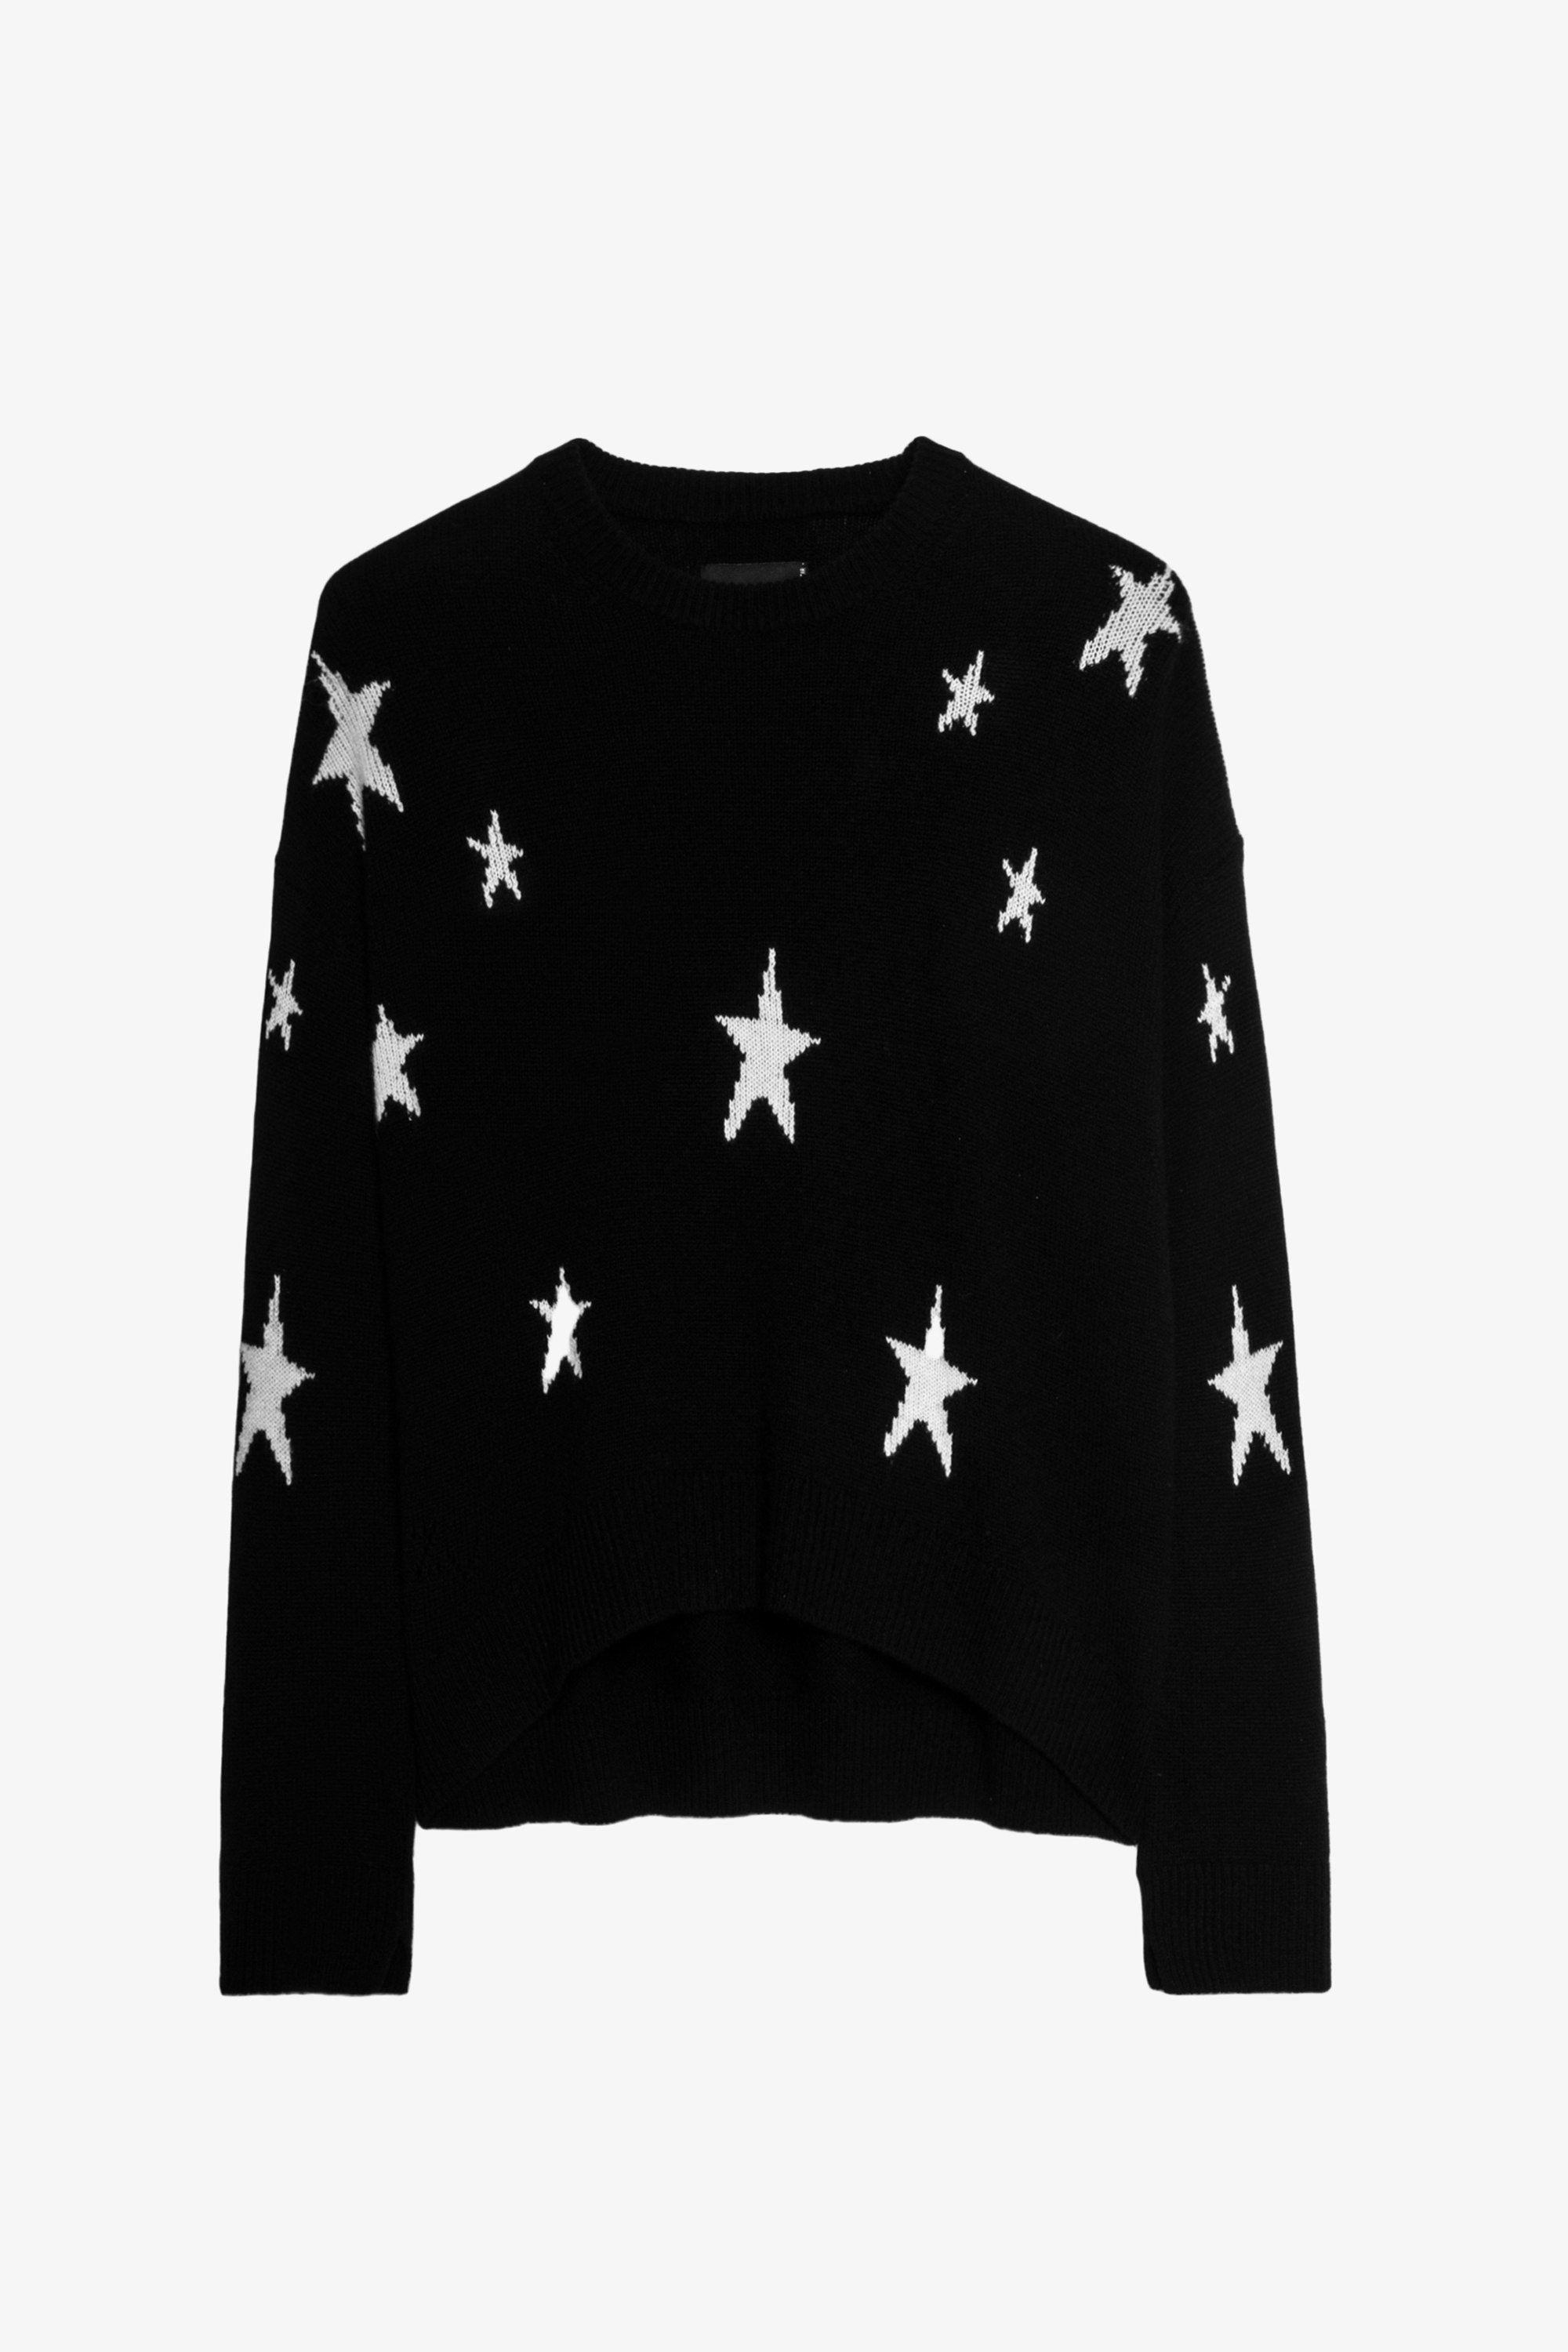 Markus Cashmere Stars Jumper  - Cashmere sweater with motif.